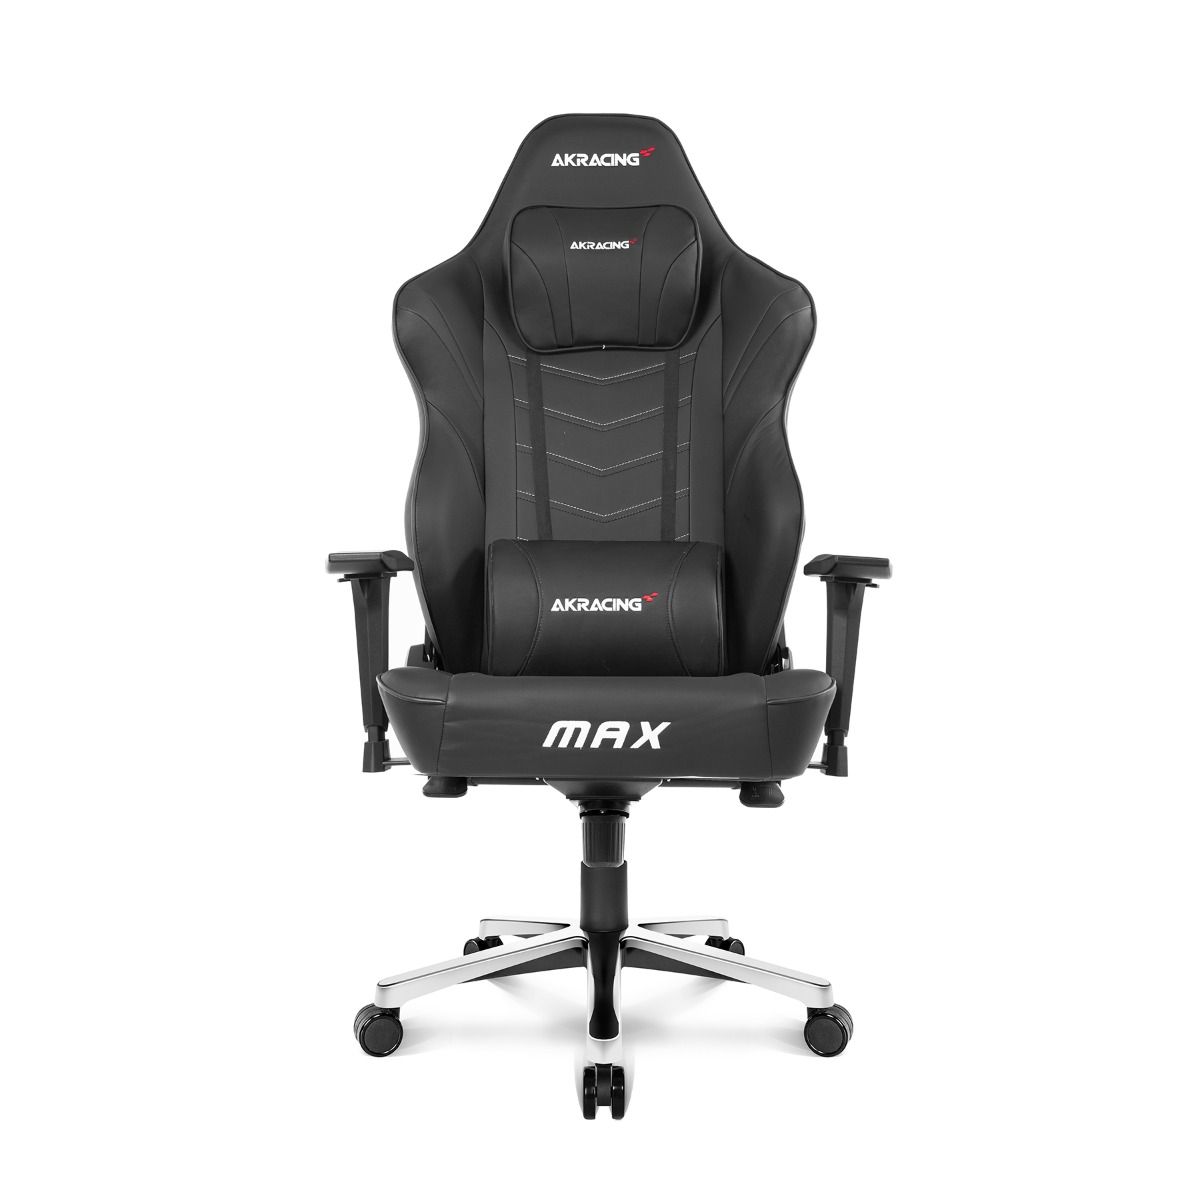 AKRACING MAX Series Gaming Chair Black